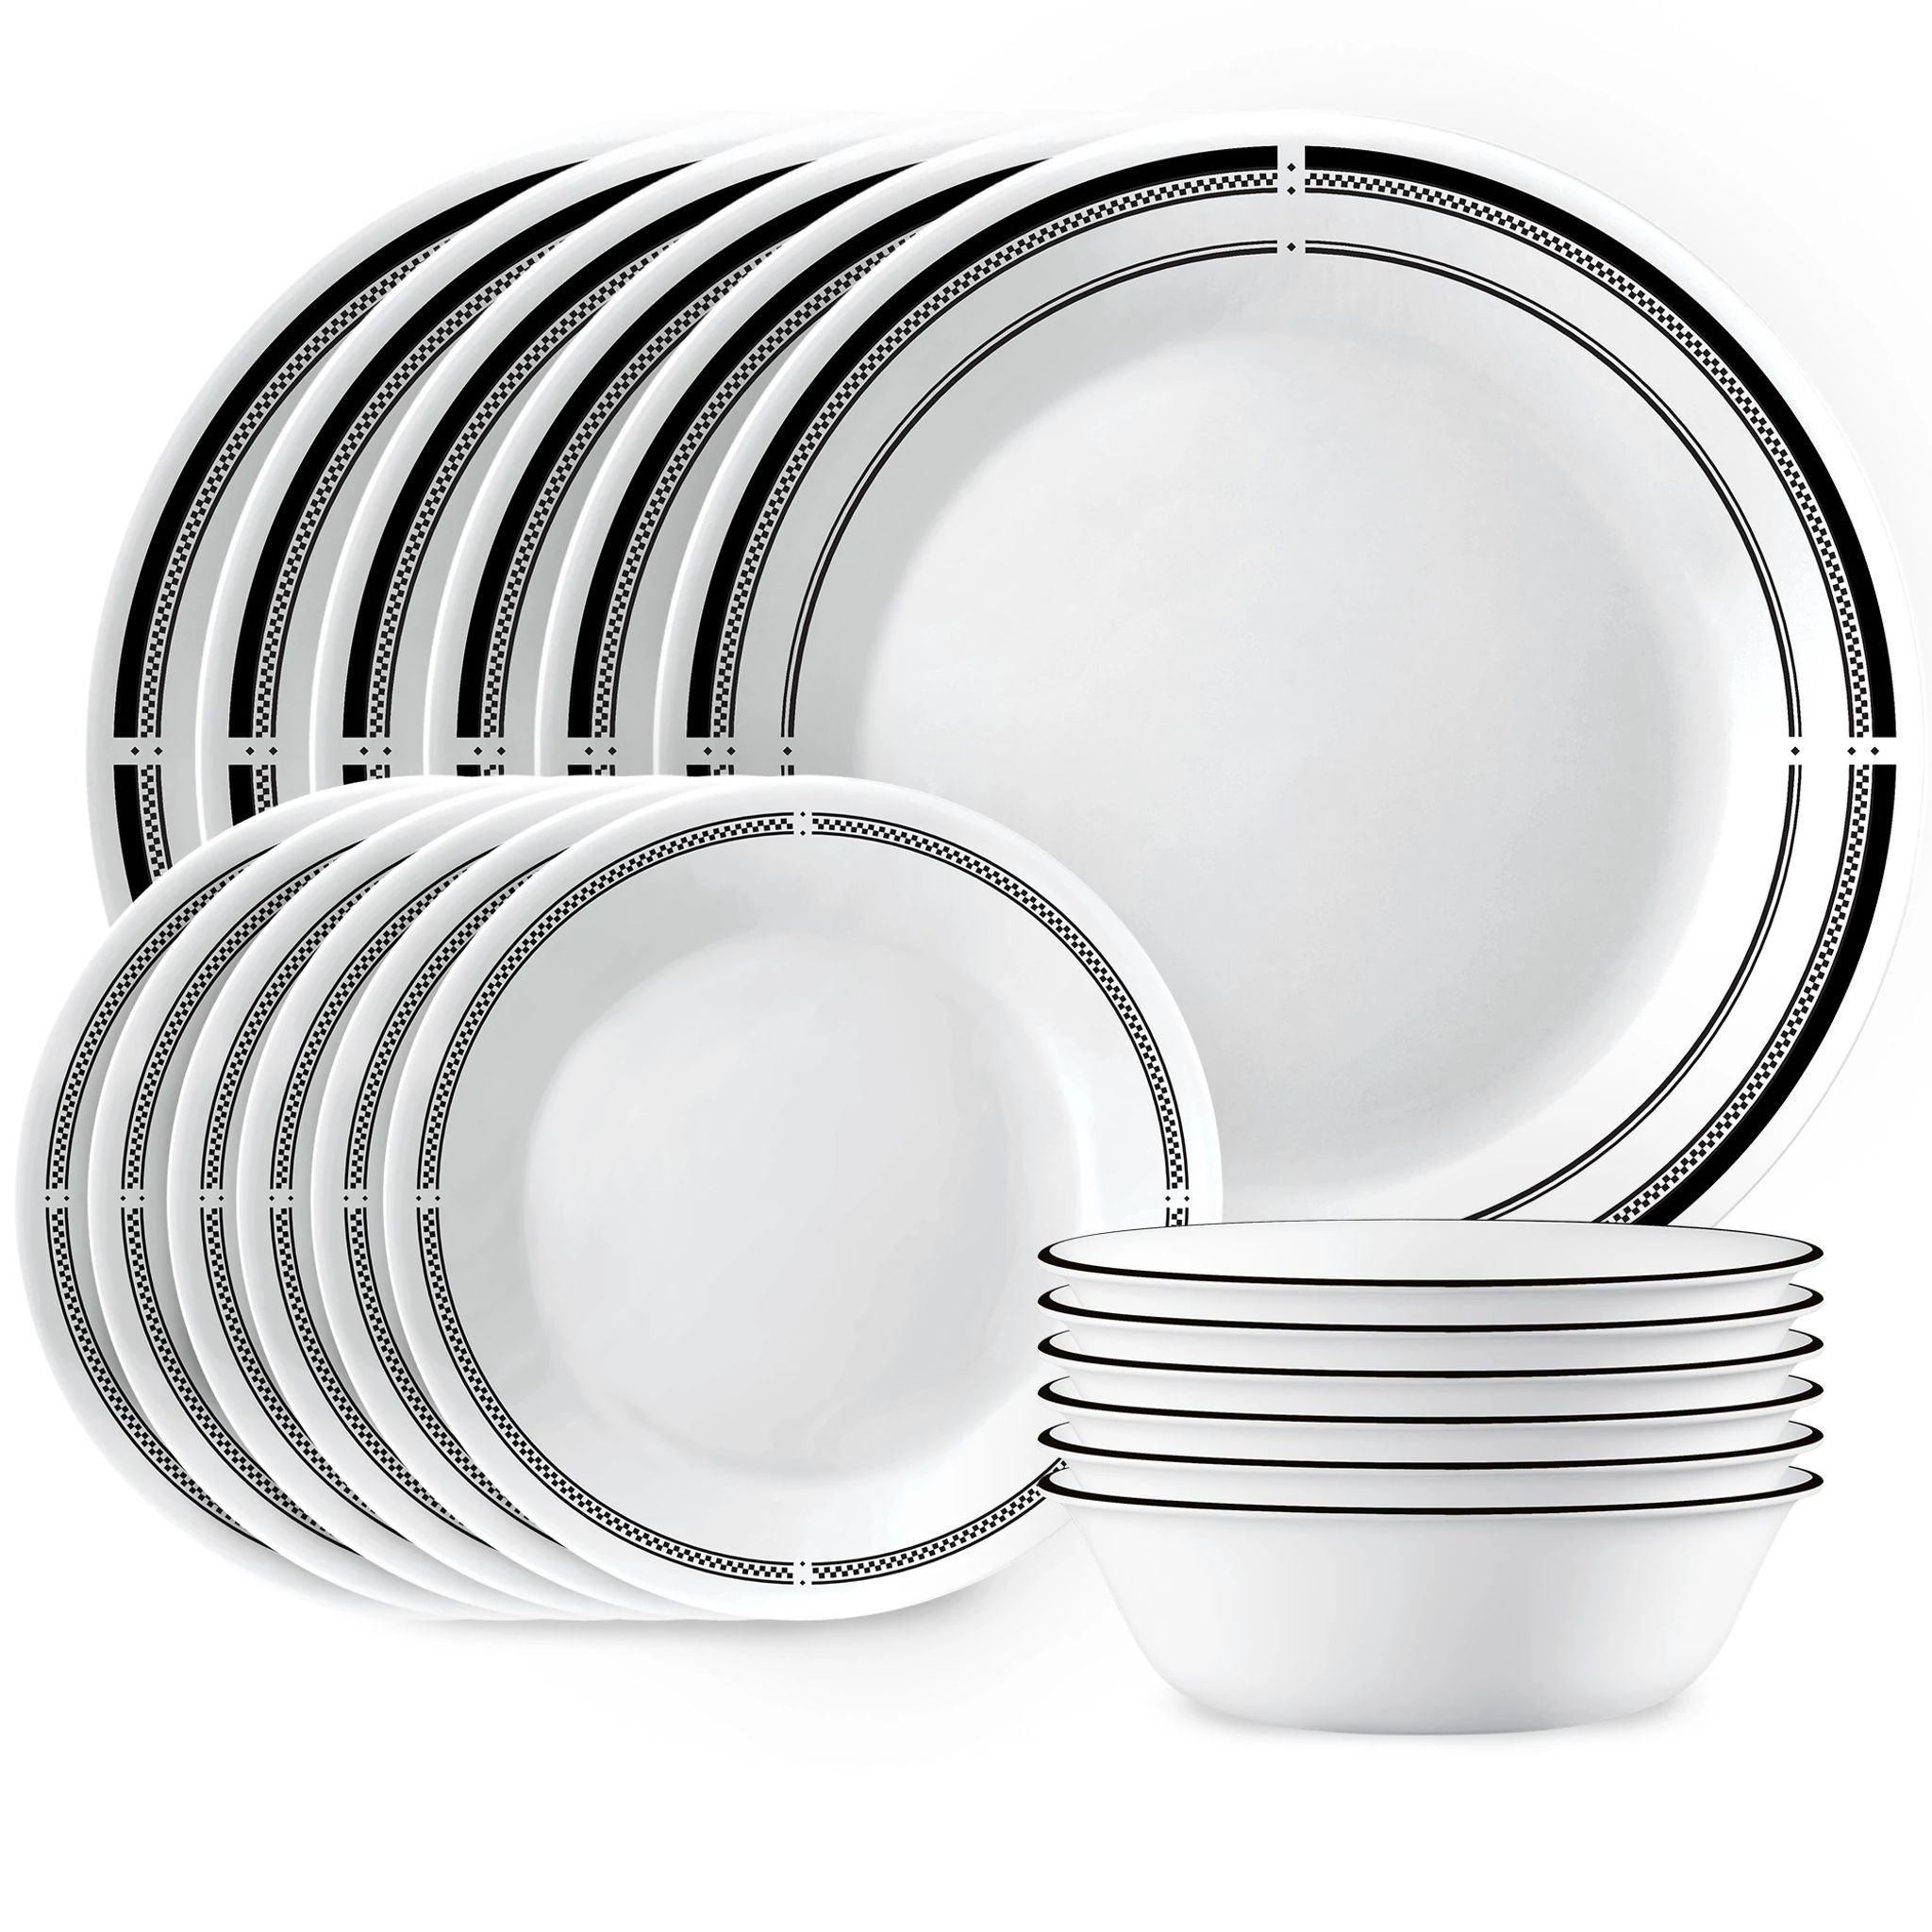 Corelle 18-Piece Round Dinnerware Set, Service for 6, Lightweight Round Plates and Bowls Set, Vitrelle Triple Layer Glass, Brasserie